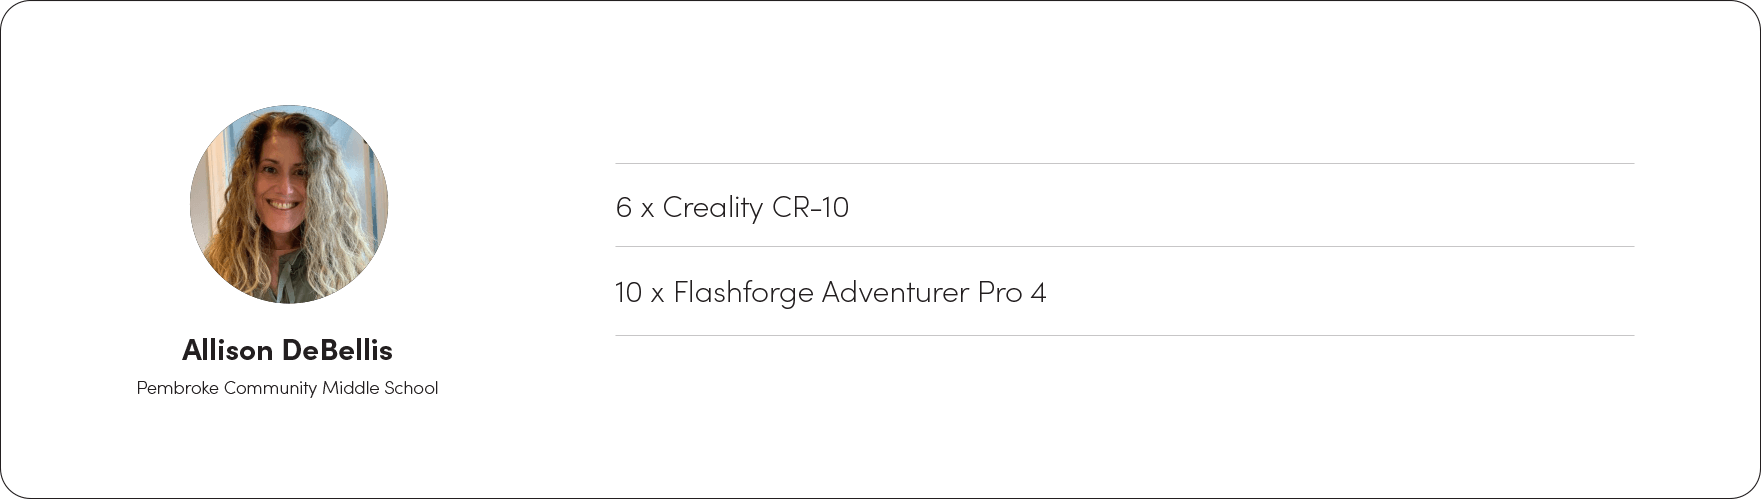 A headshot image of teacher Allison DeBellis with the following list - 6 x Creality CR-10, 10 x Flashforge Adventurer Pro 4.